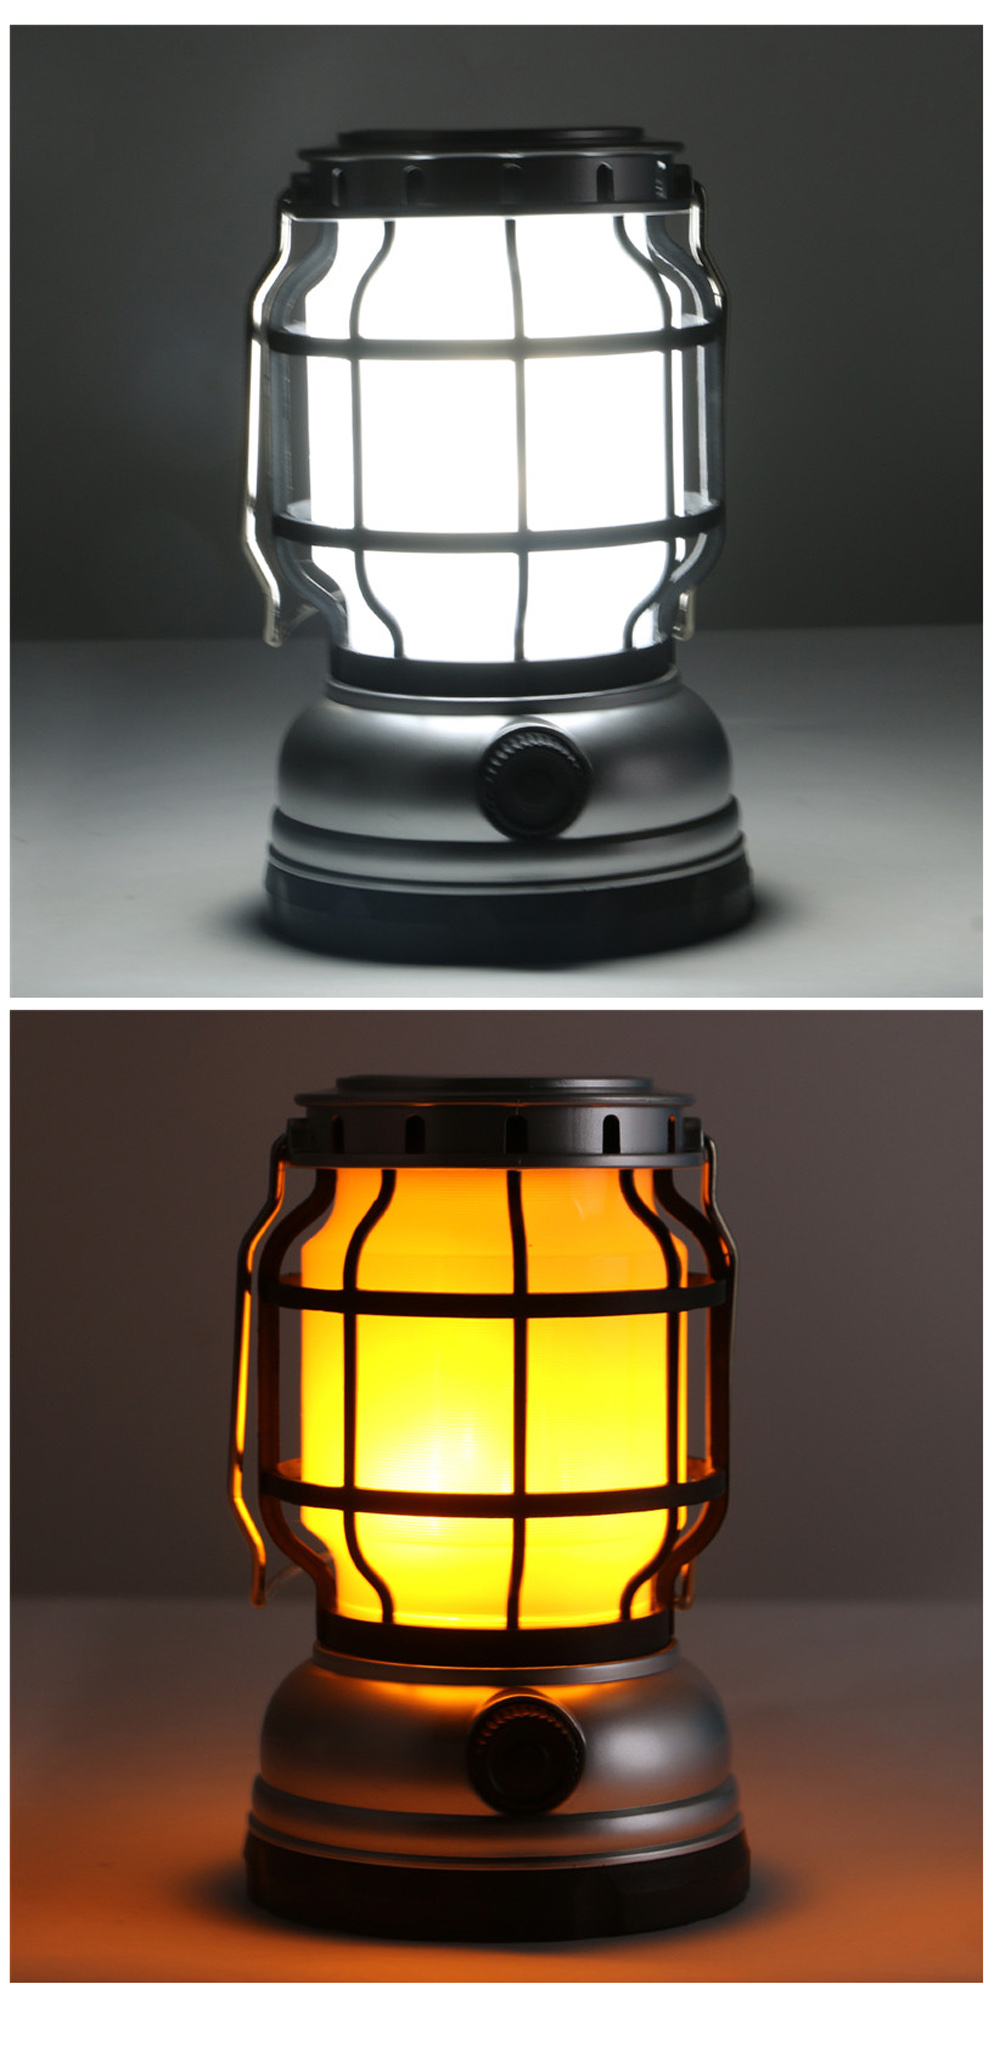 XANESreg-Solar-Powered-Kerosene-Lamp-Portable-Camping-Light-Hanging-Tent-Lantern-USB-Rechargeable-wi-1854602-4